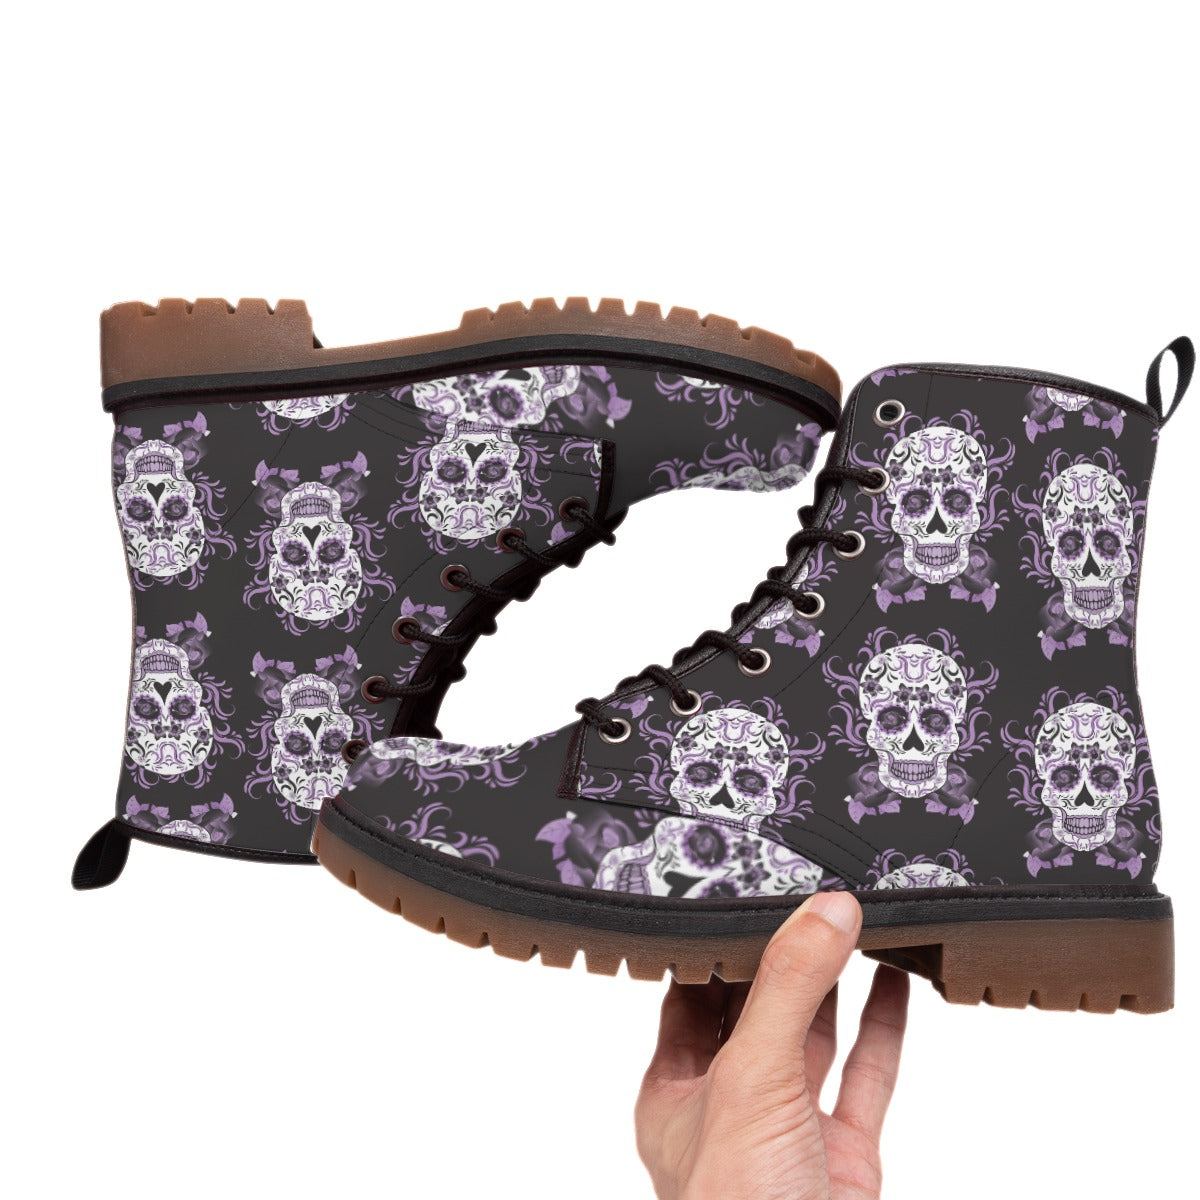 Day of the dead sugar skull Short Boots, Dia de los muertos skeleton boots shoes